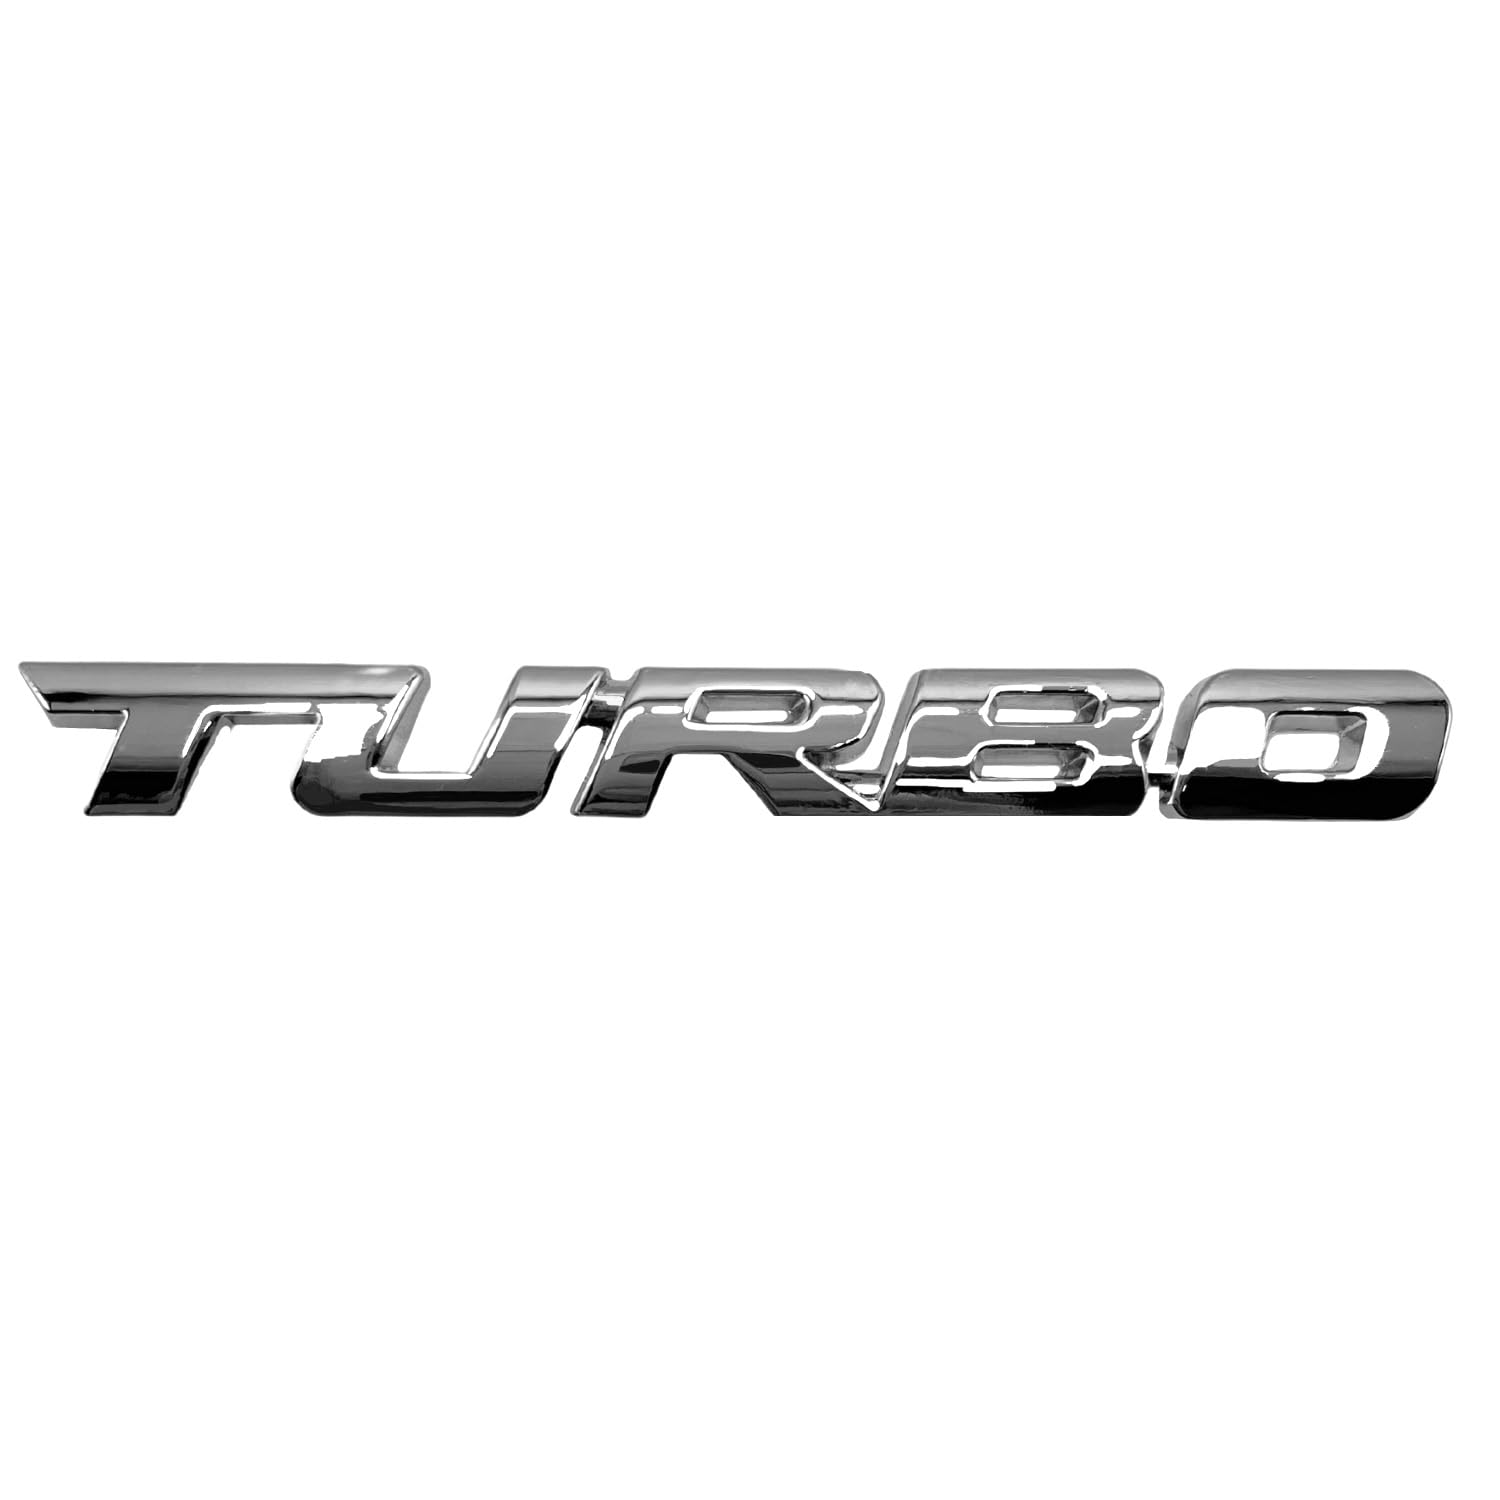 AUTOZOCO Turbo-Aufkleber, Turbo-Abzeichen, Turbo-Aufkleber, Turbo-Aufkleber, geeignet für Kofferraum und Seiten, universell, Metallmaterial, 9,7 cm Breite x 1,1 cm Höhe (Silber) von AUTOZOCO